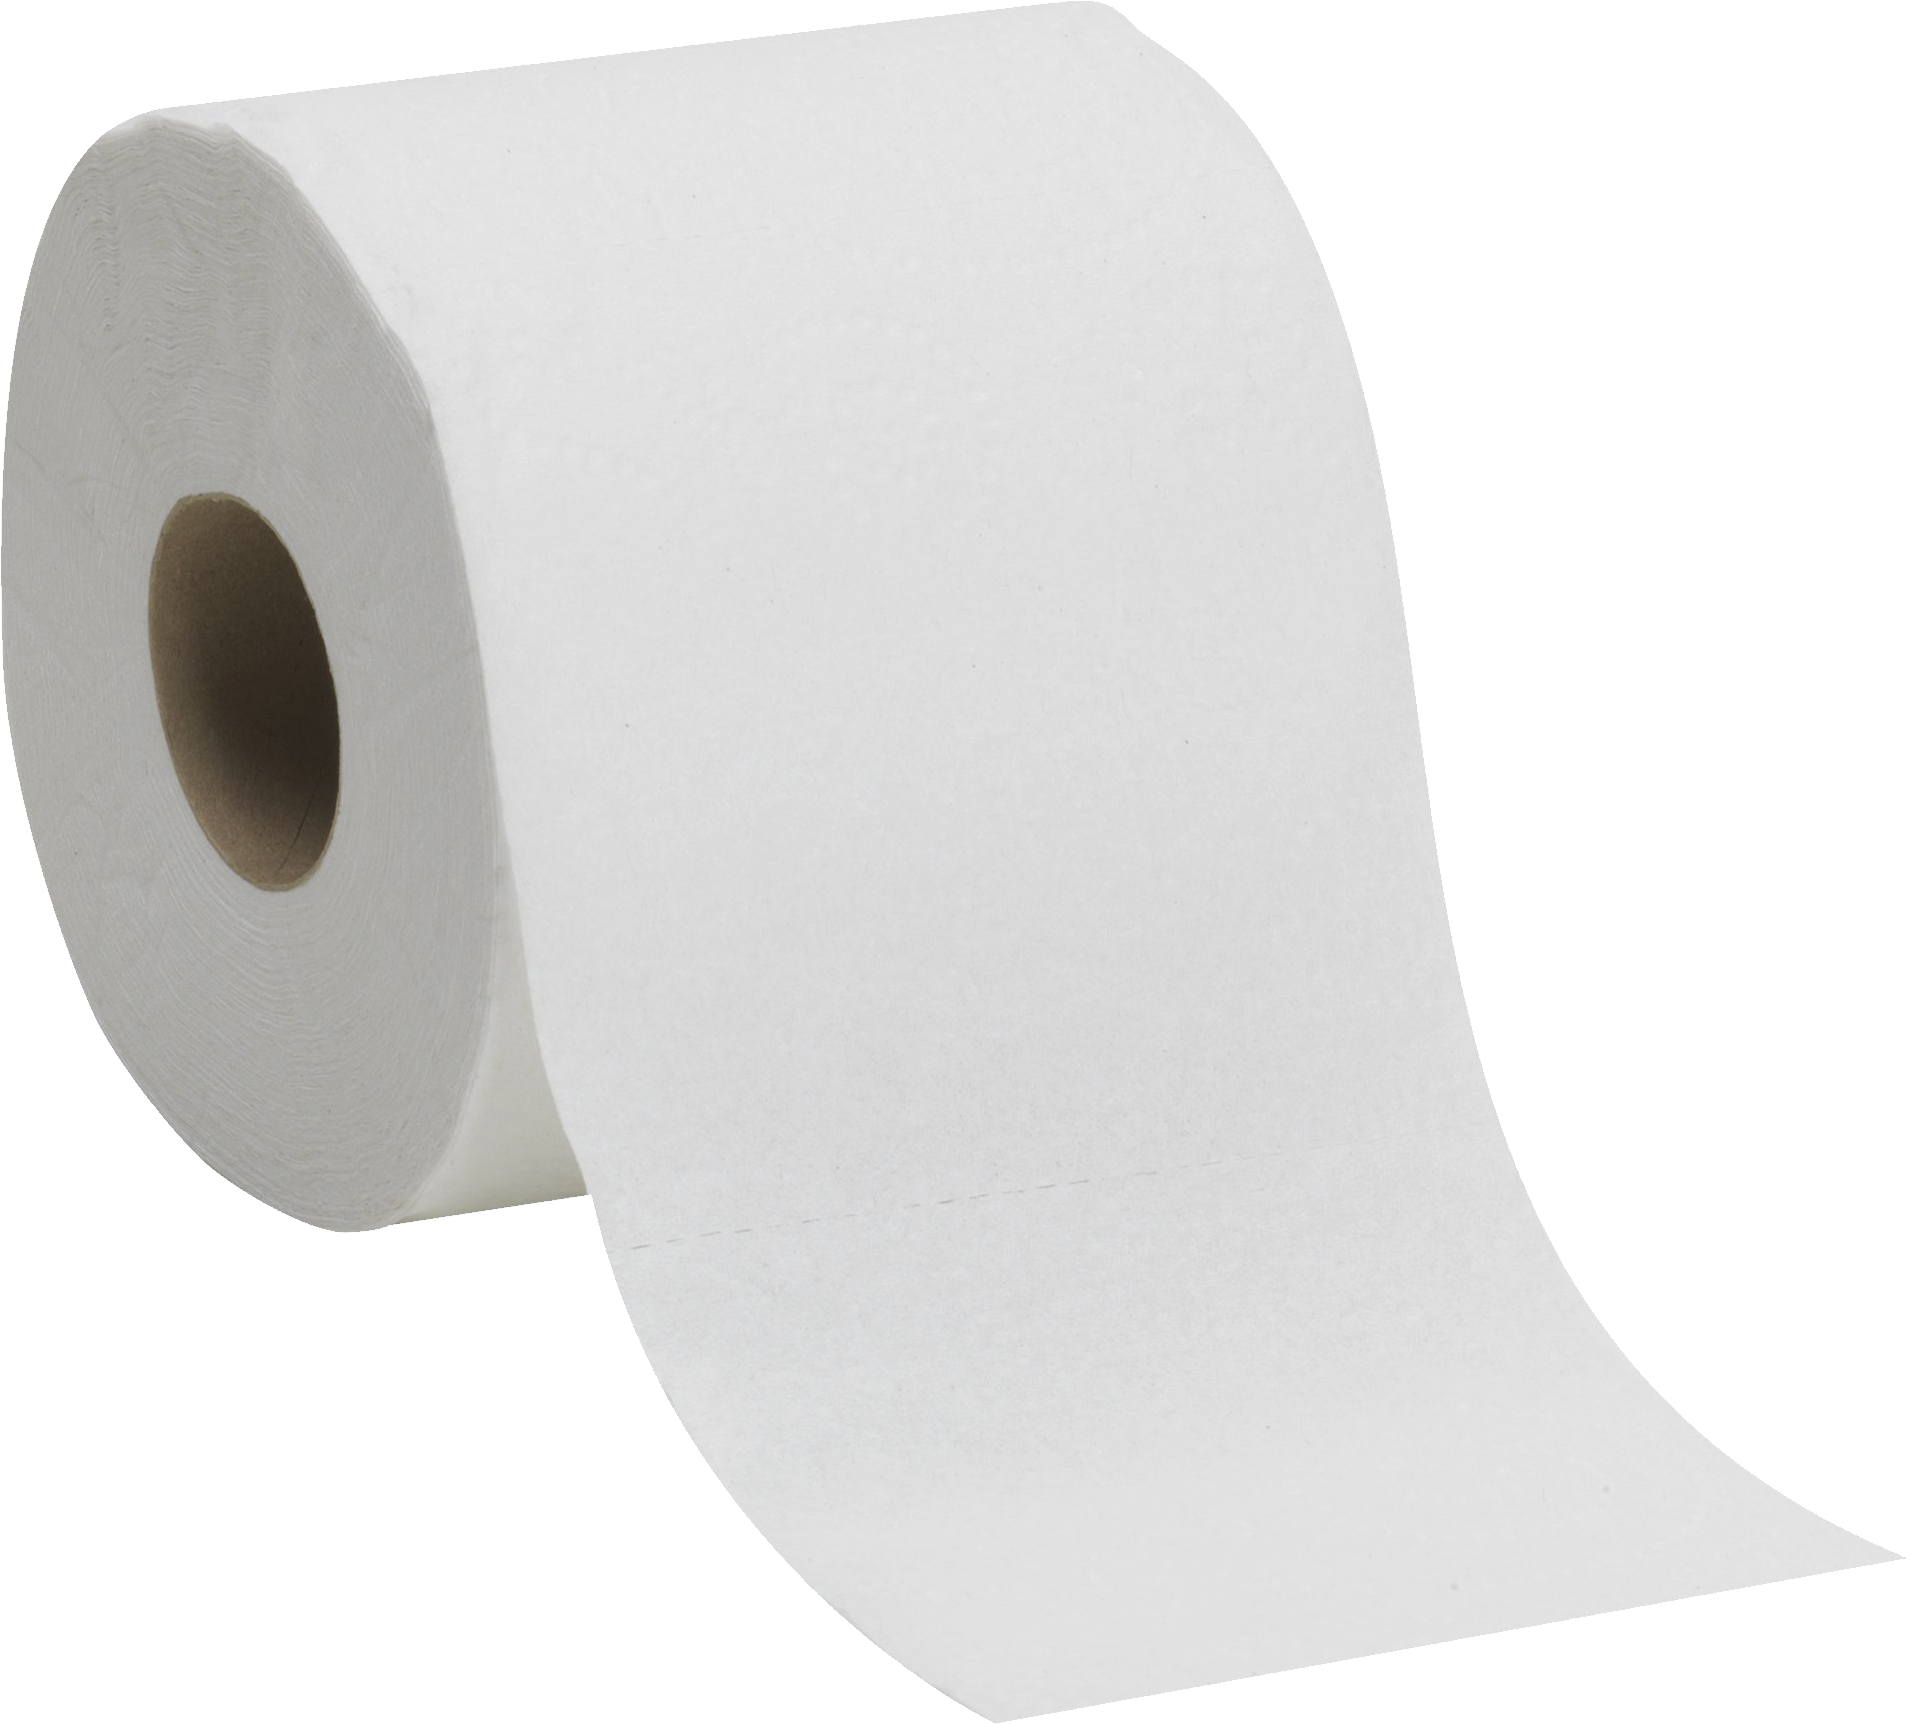 Toilet paper Euclidean vector